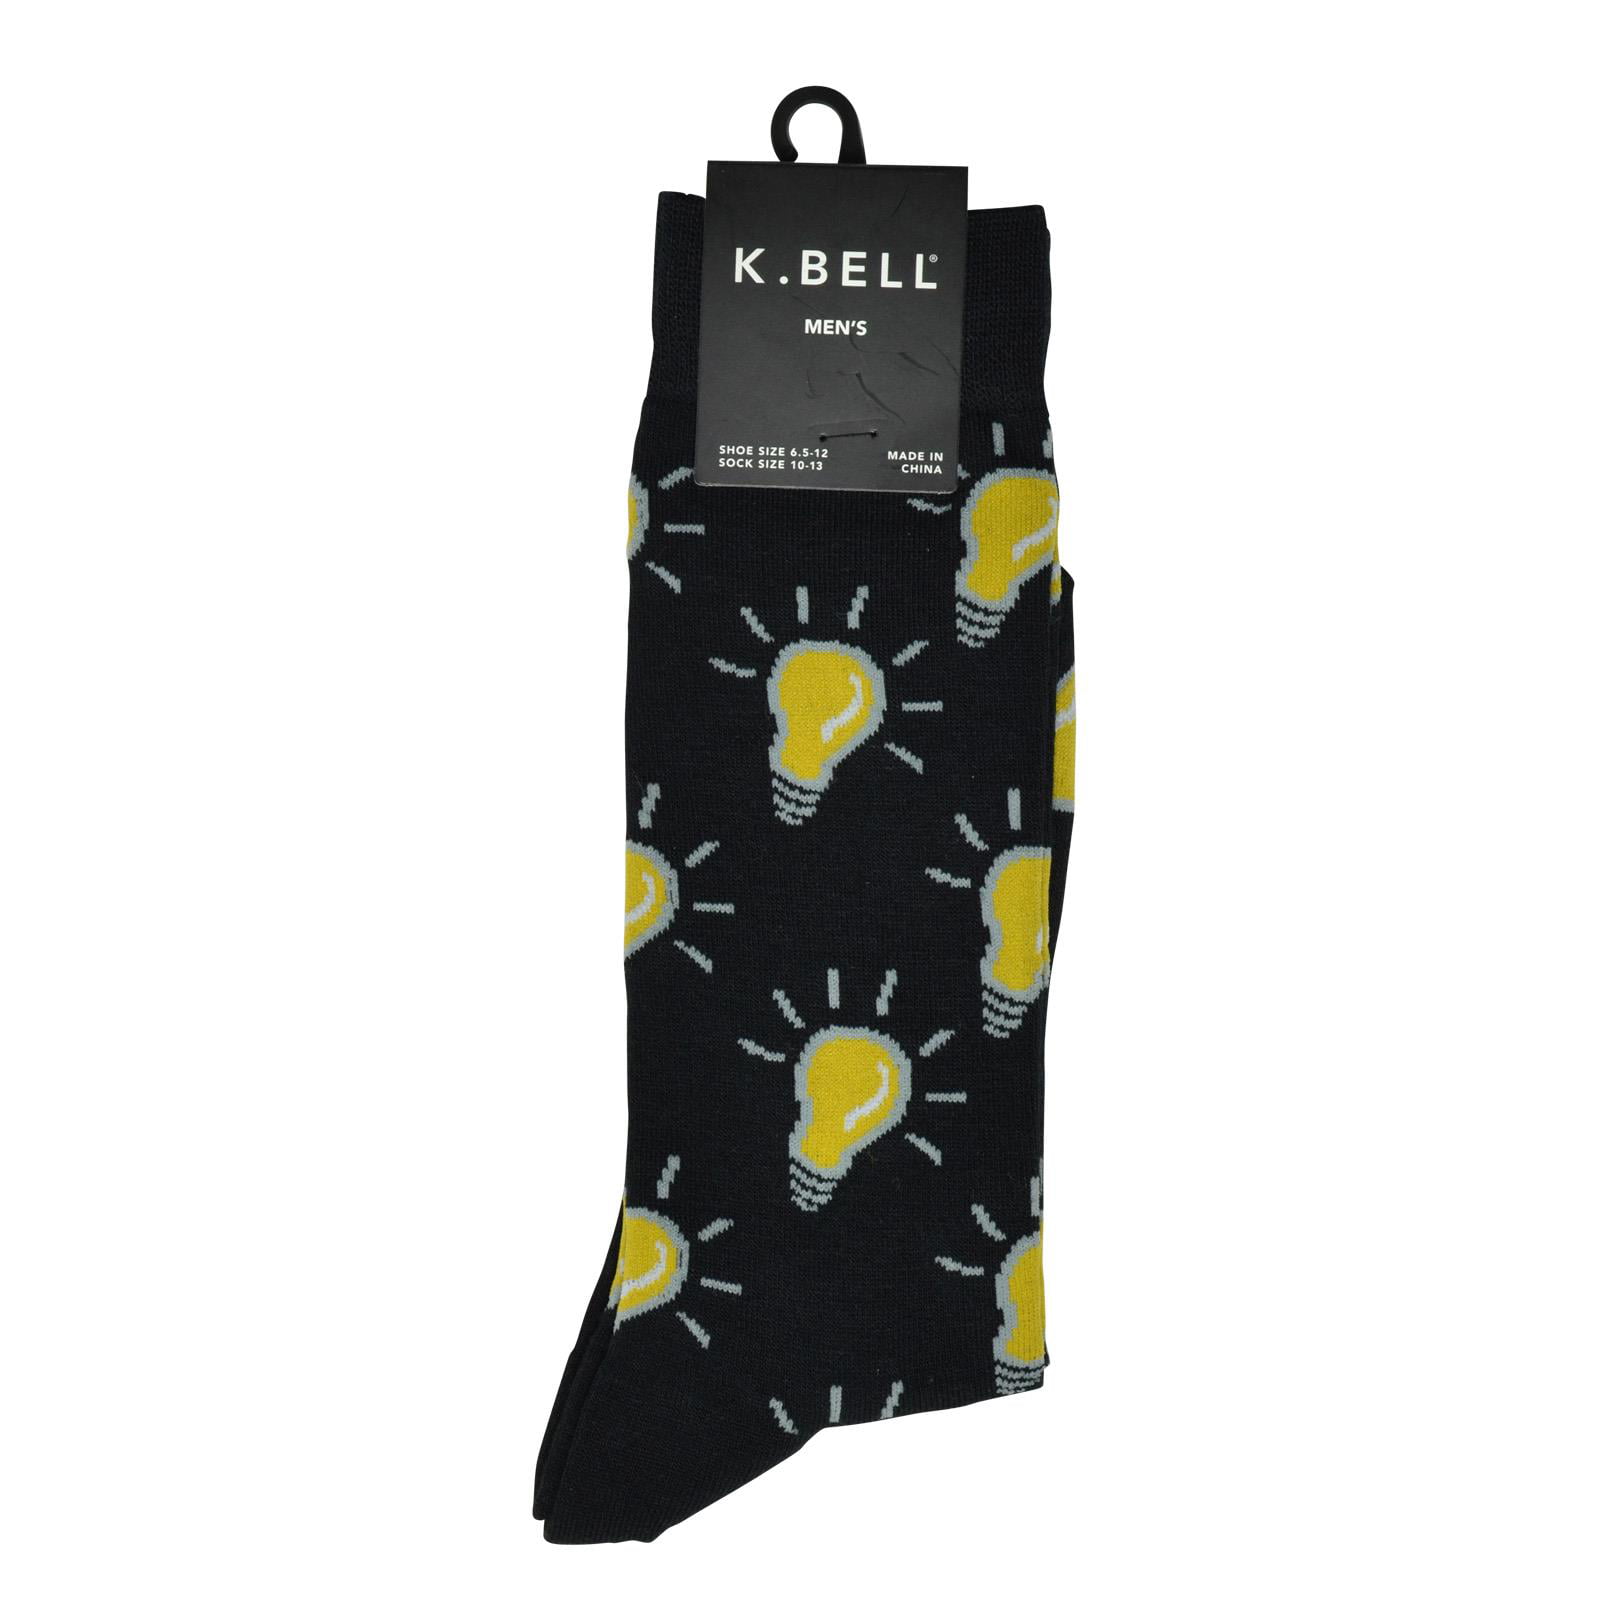 K Bell Kurb Socks Crew Socks Dogs New Men's Size 9-12 Fashion Socks 